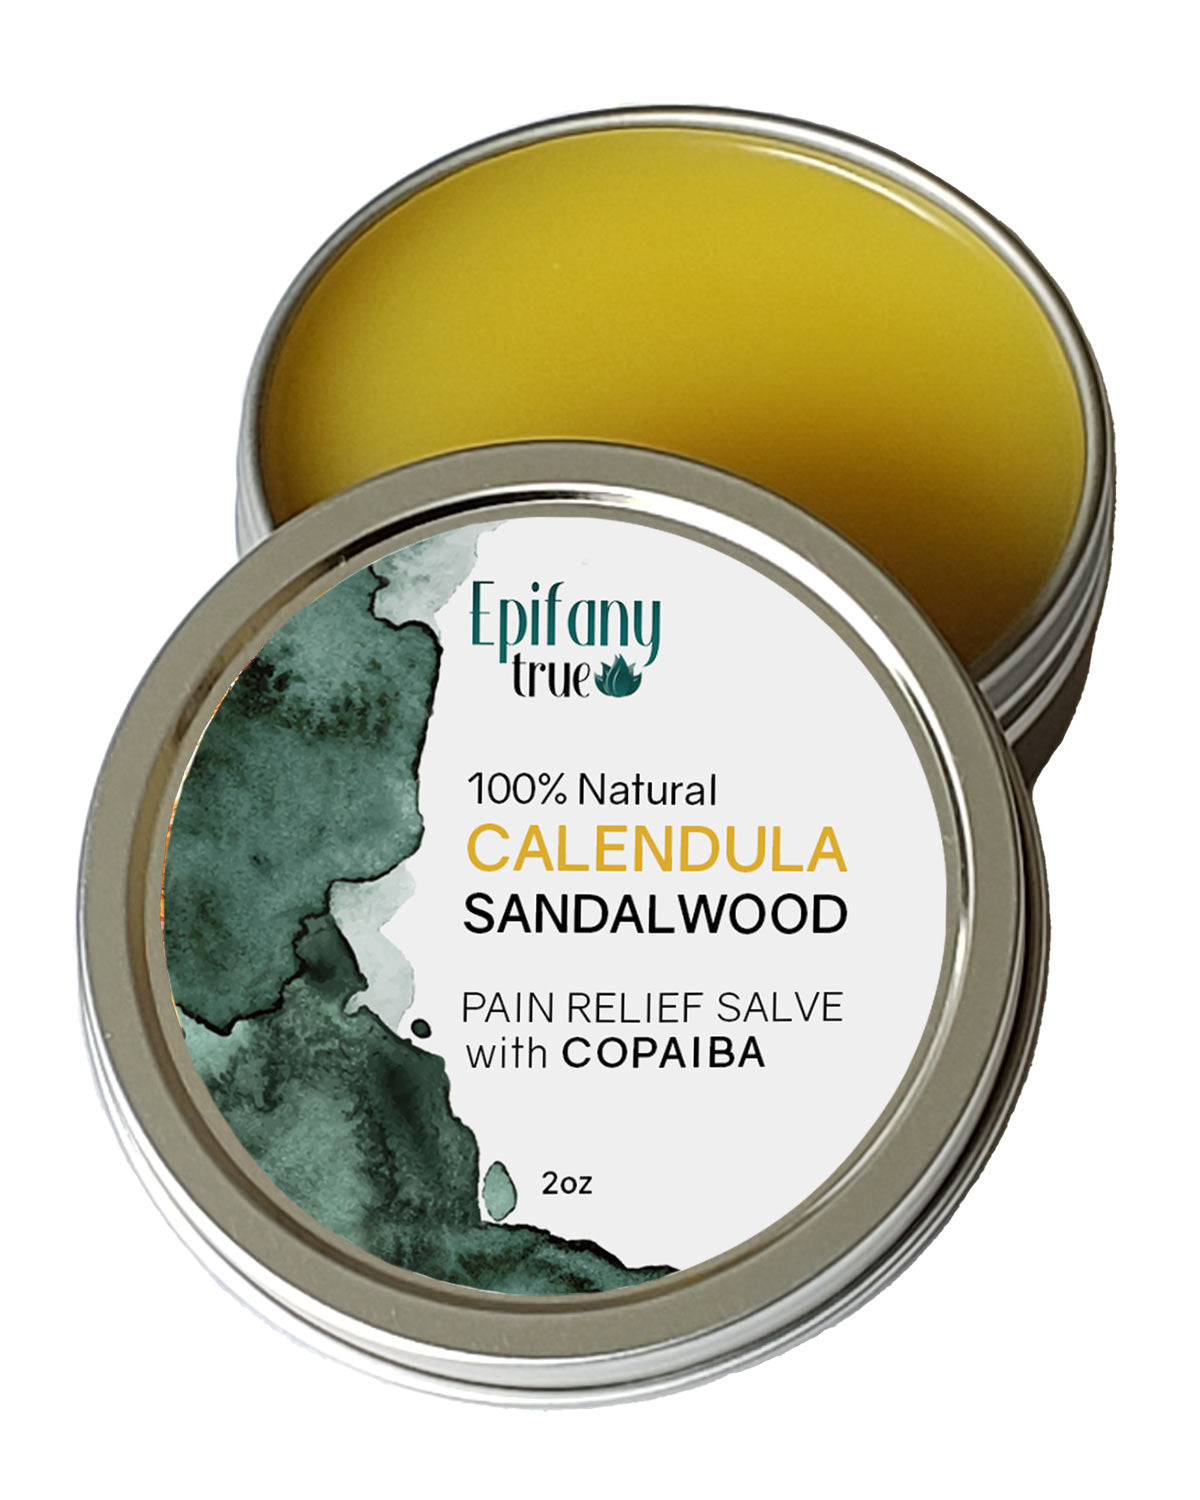 Organic Prickly Pear Camellia Oil Serum 1oz and Calendula & Sandalwood Pain Relief Salve with Copaiba 2oz Bundle